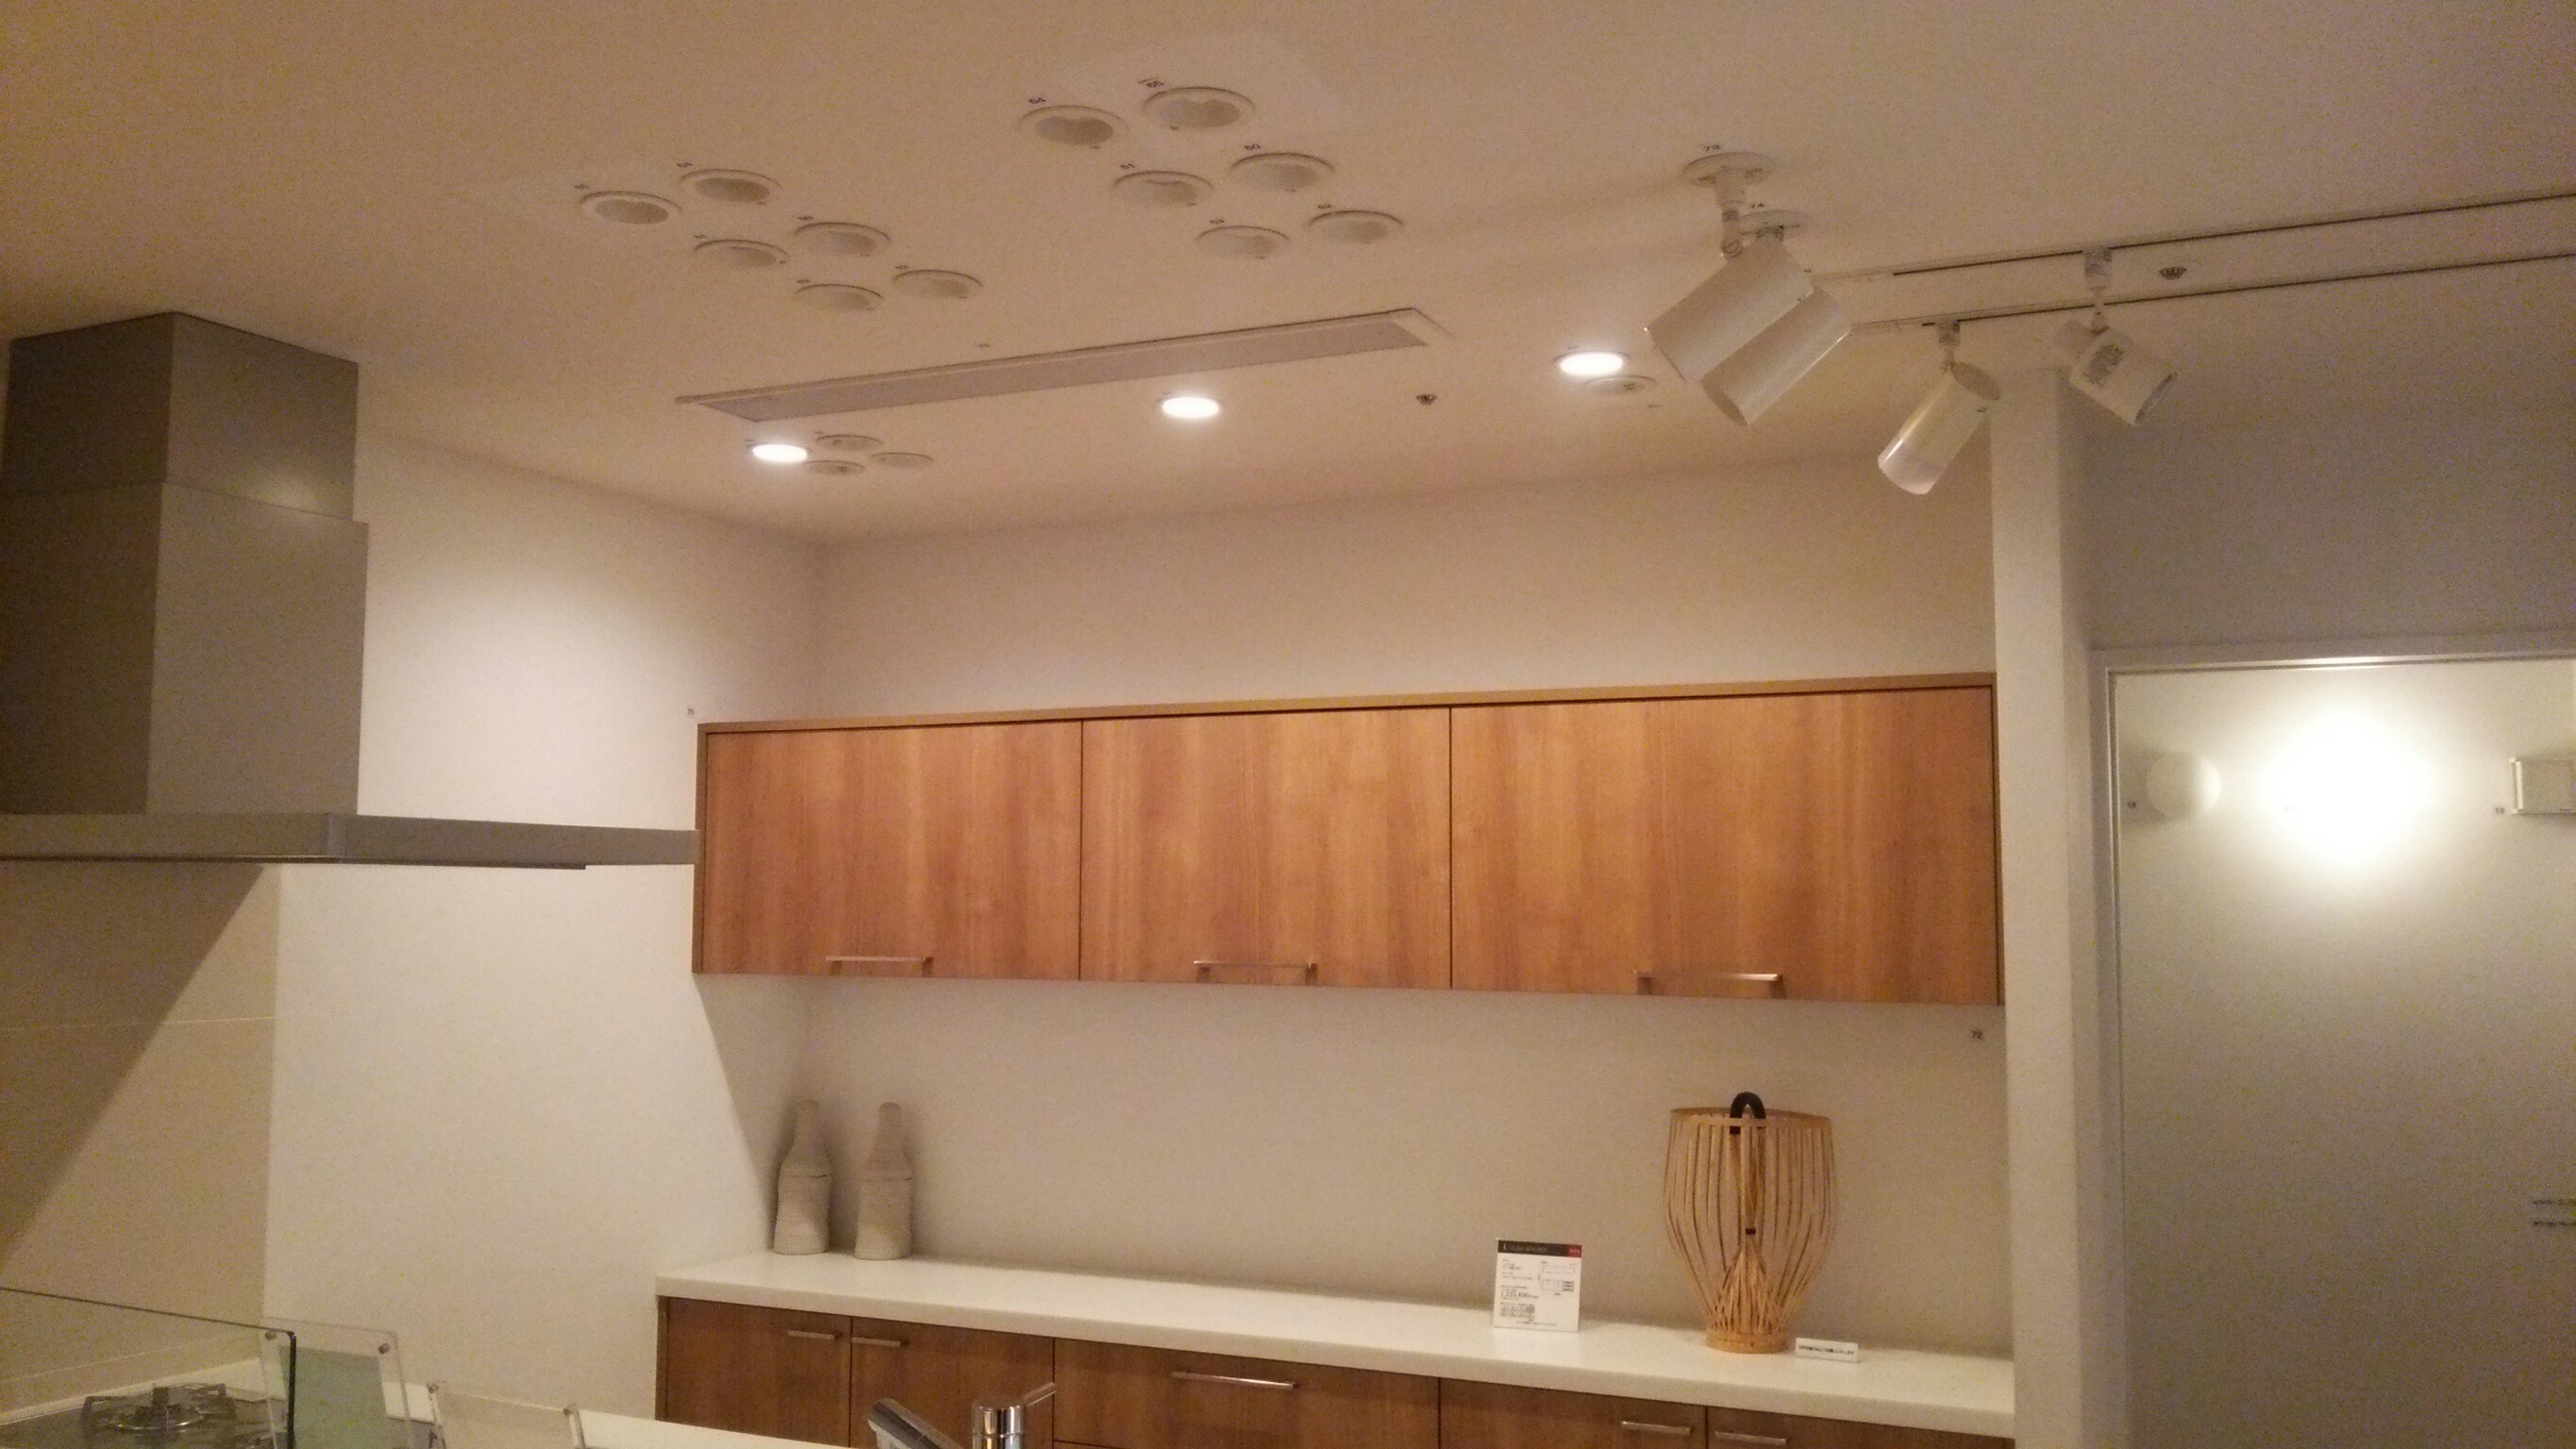 ｌｅｄ照明 拡散ライト と 集光ライト の違いとは キッチン向けの配置計画 一条工務店アイスマート グランセゾン 家造ブログ